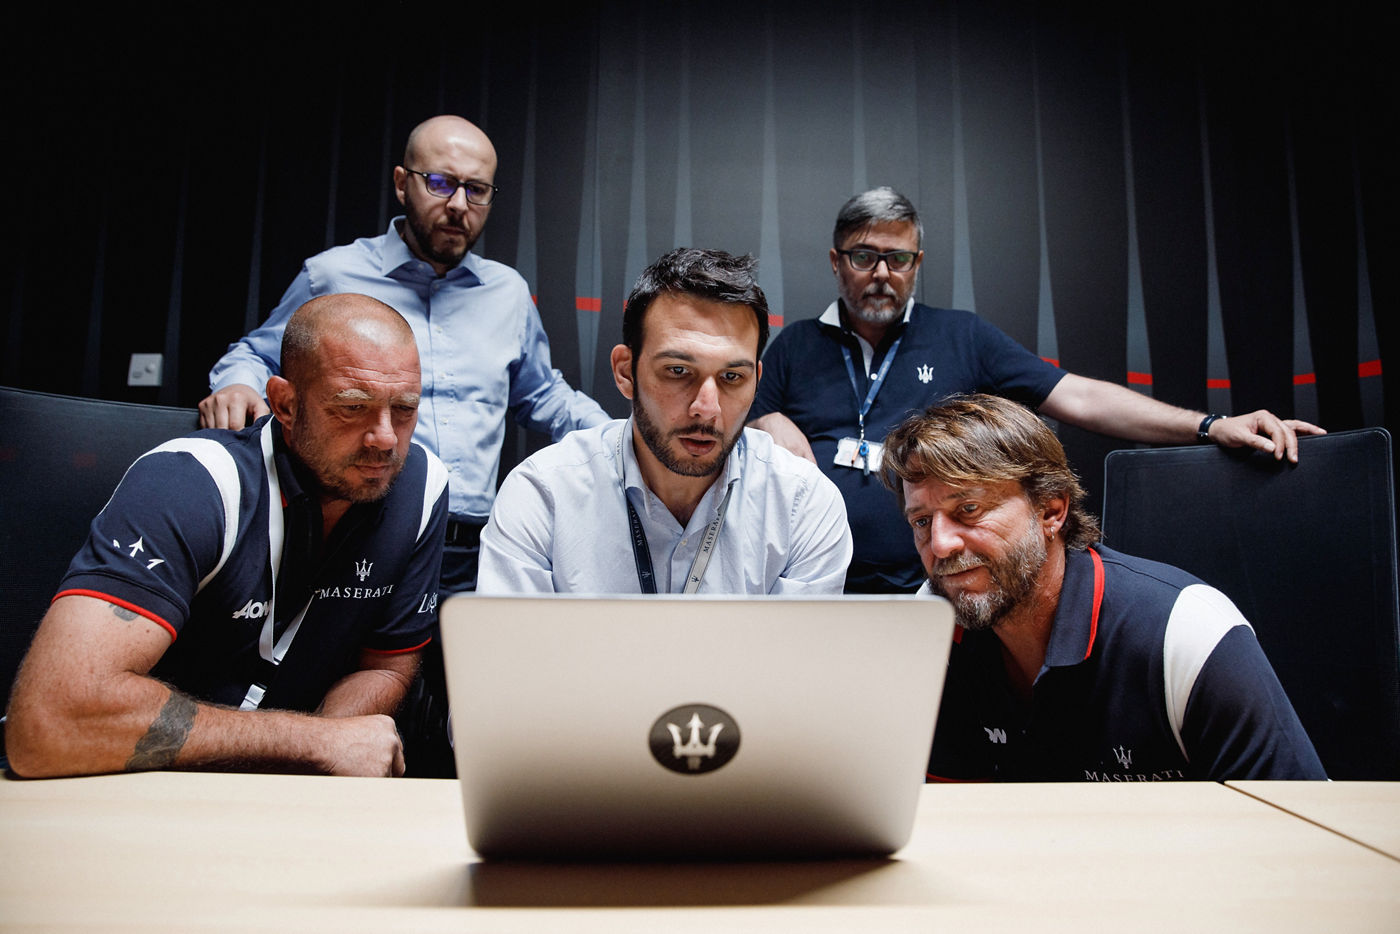 Giovanni_Soldini_and_Maserati_Engineering_Team